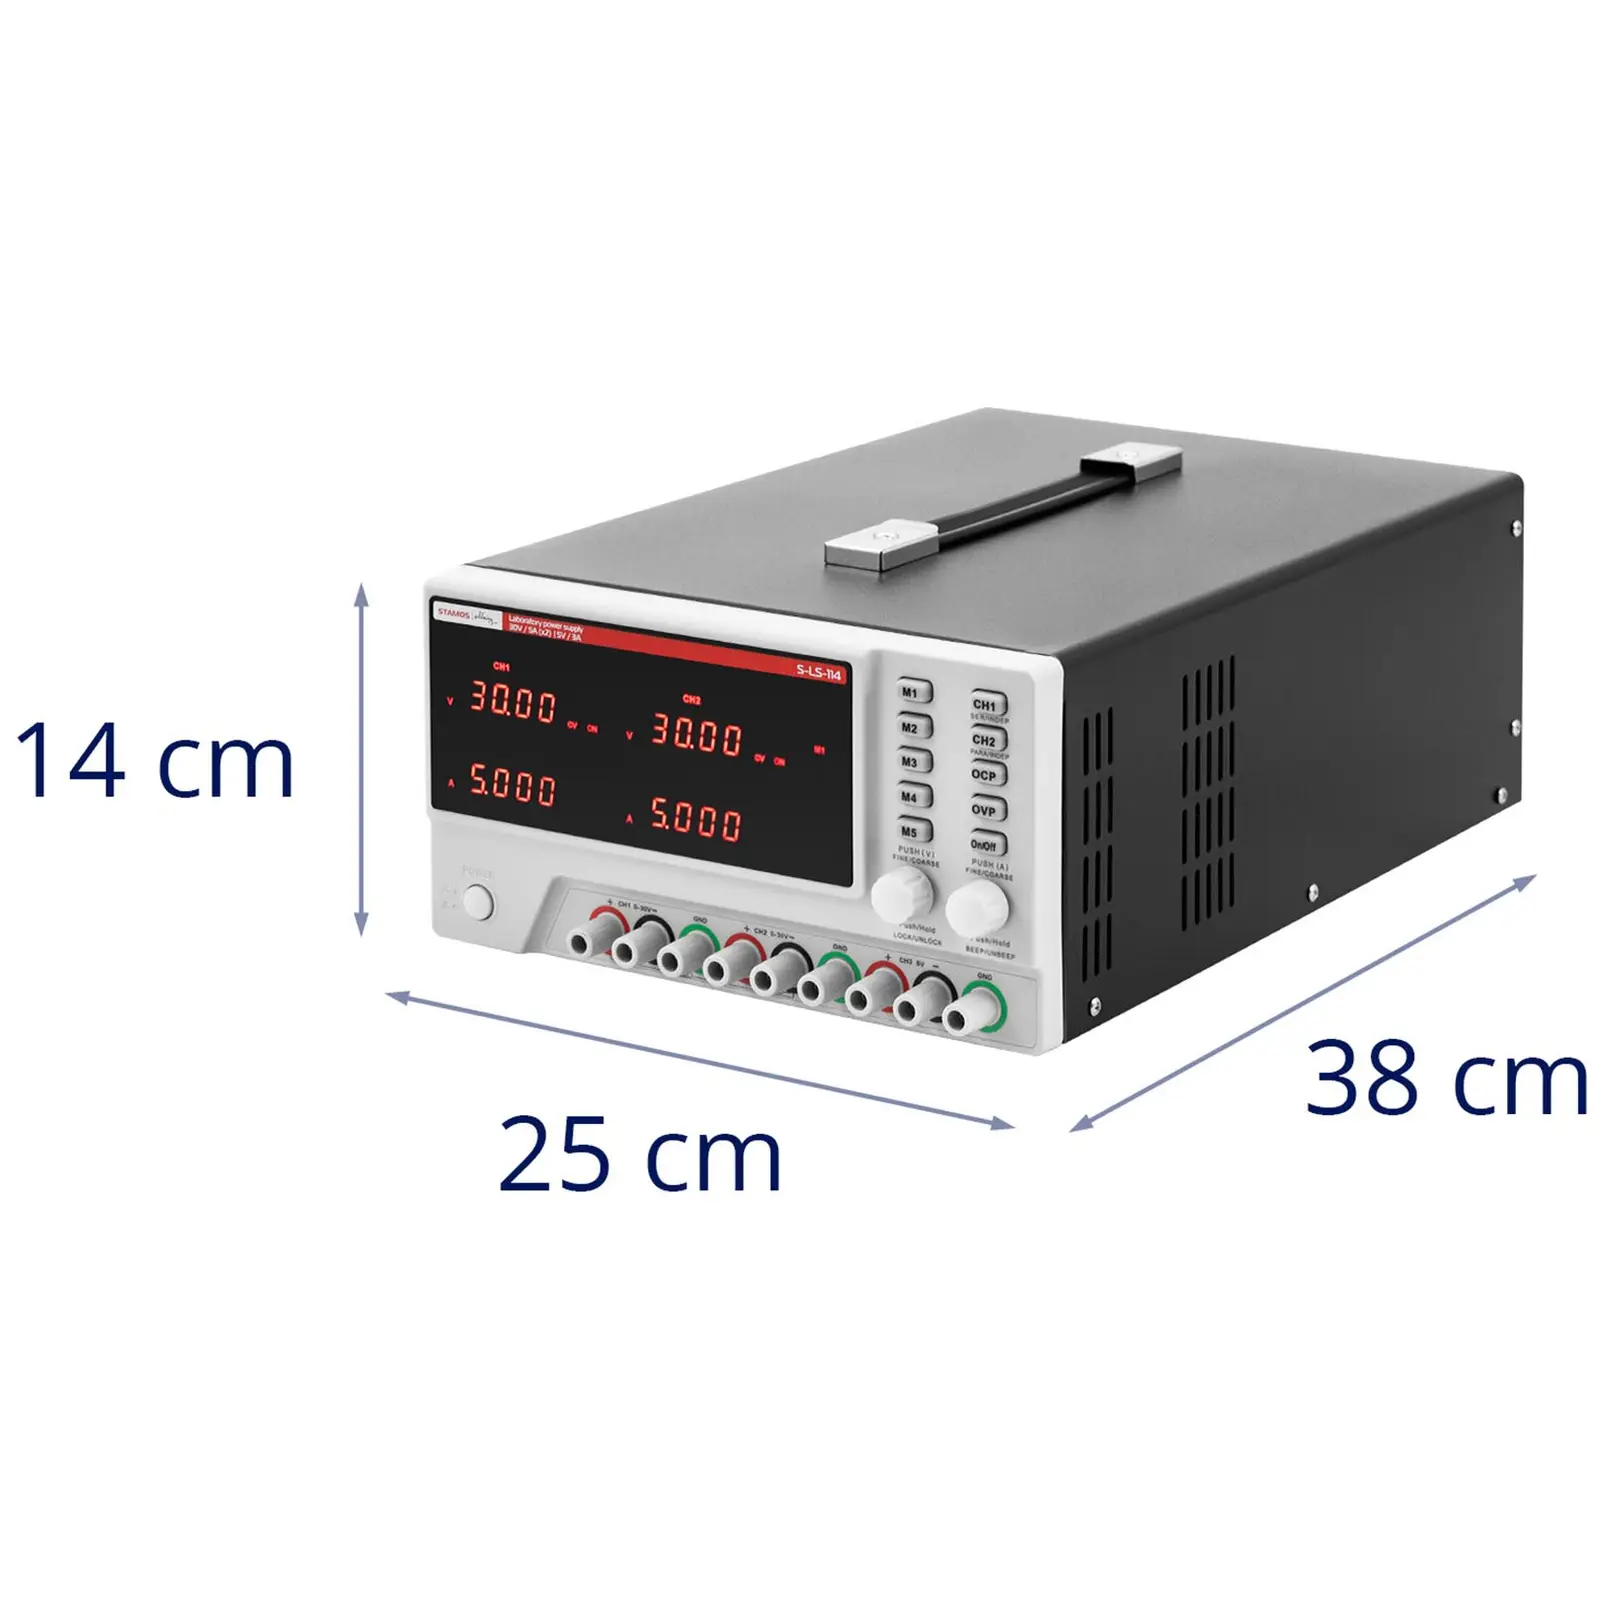 Laboratory Power Supply Unit - 0 - 30 V - 0 - 5 A DC - 2 x 150 W + 15 W - 5 memory locations - LED display - USB/RS232